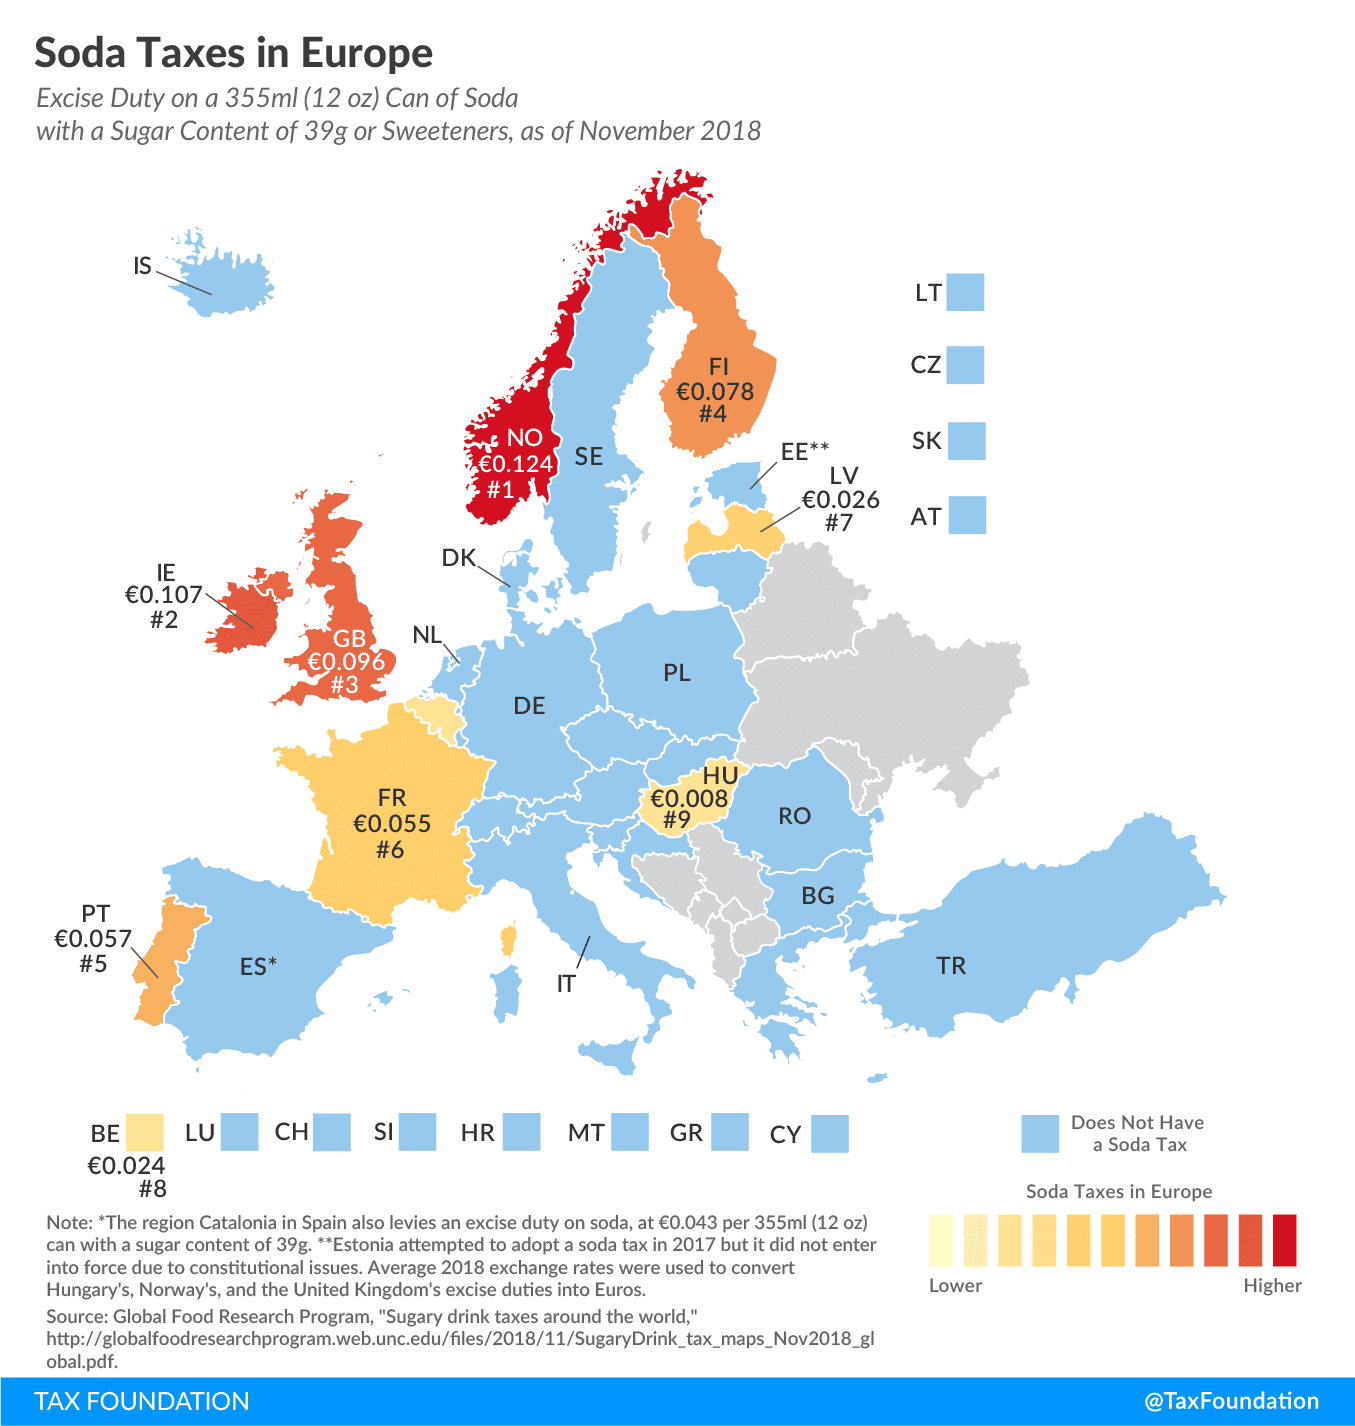 Sugar tax rates in Europe